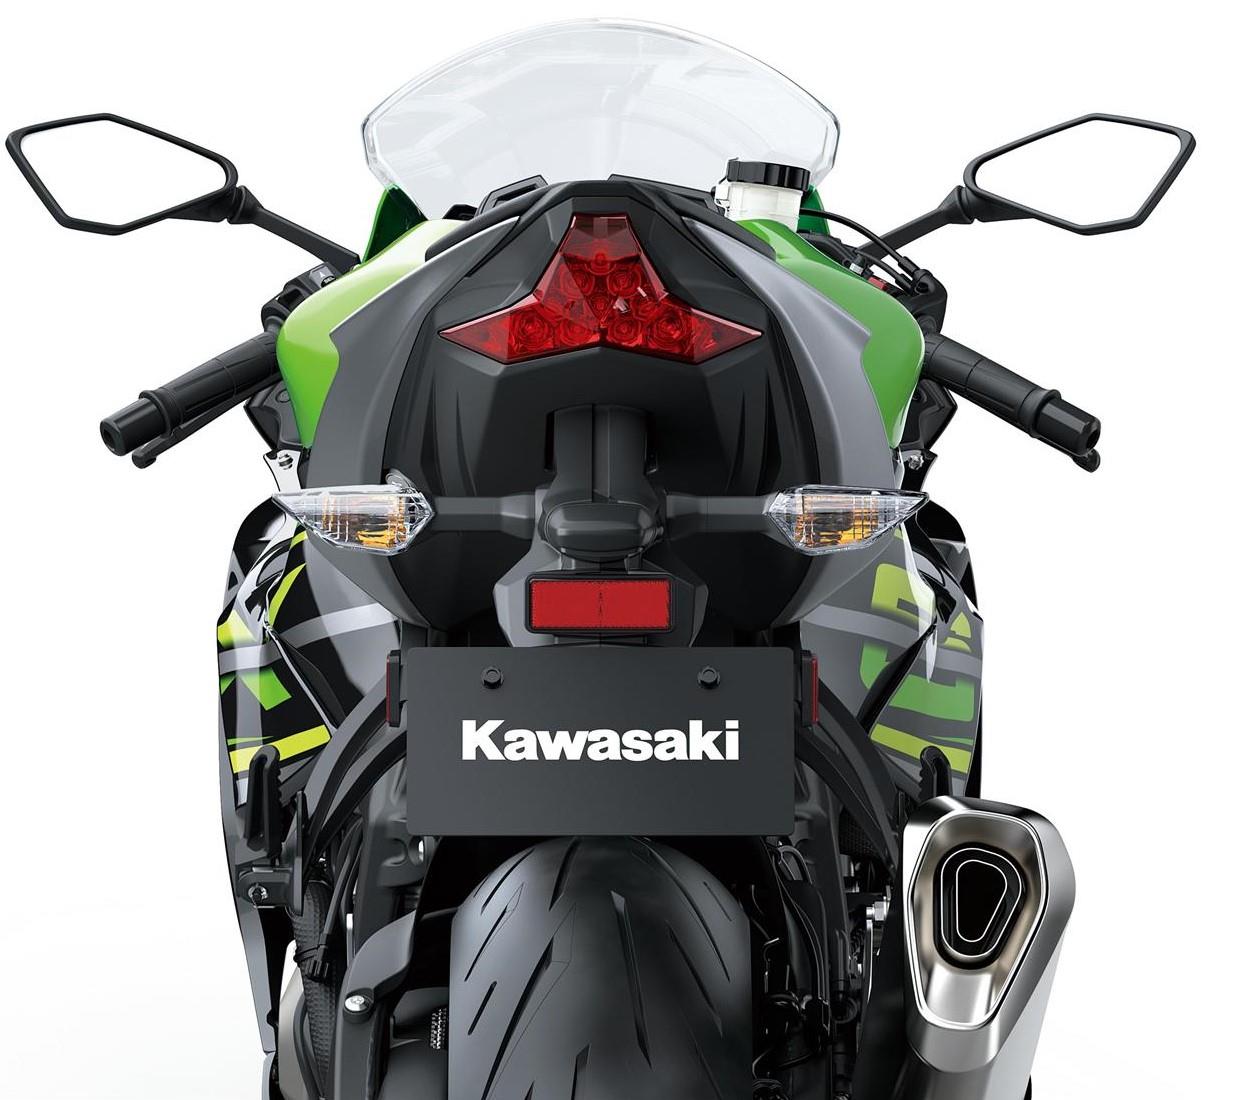 2020 Kawasaki Ninja ZX-6R Price, Specs, Top Speed & in India